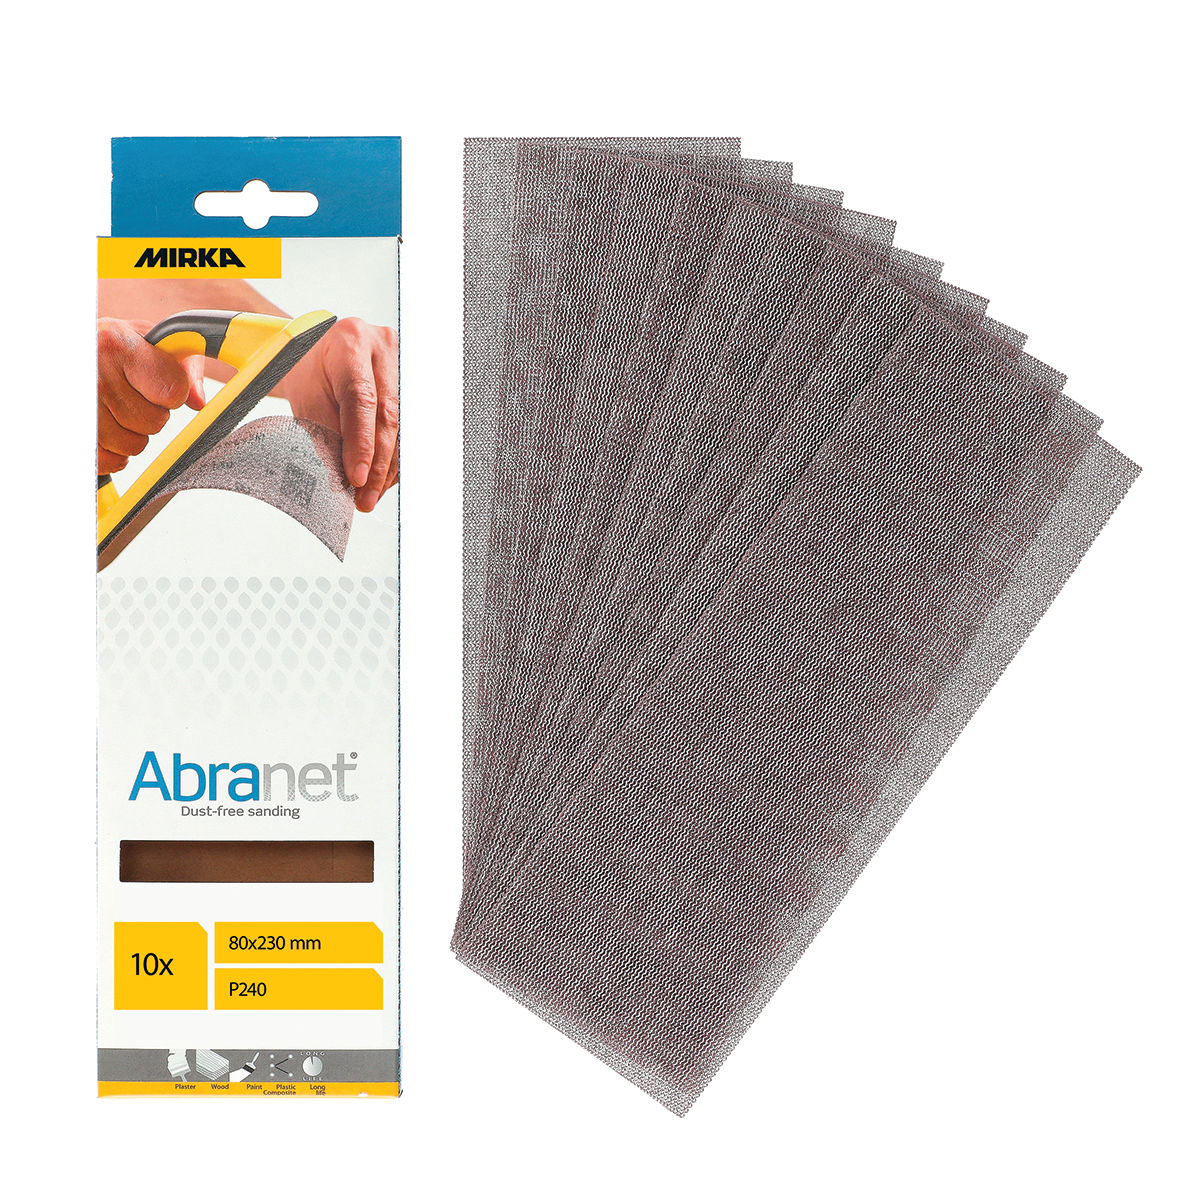 Mirka Abranet® - The Net Abrasive That Powers Up Your… - Mirka